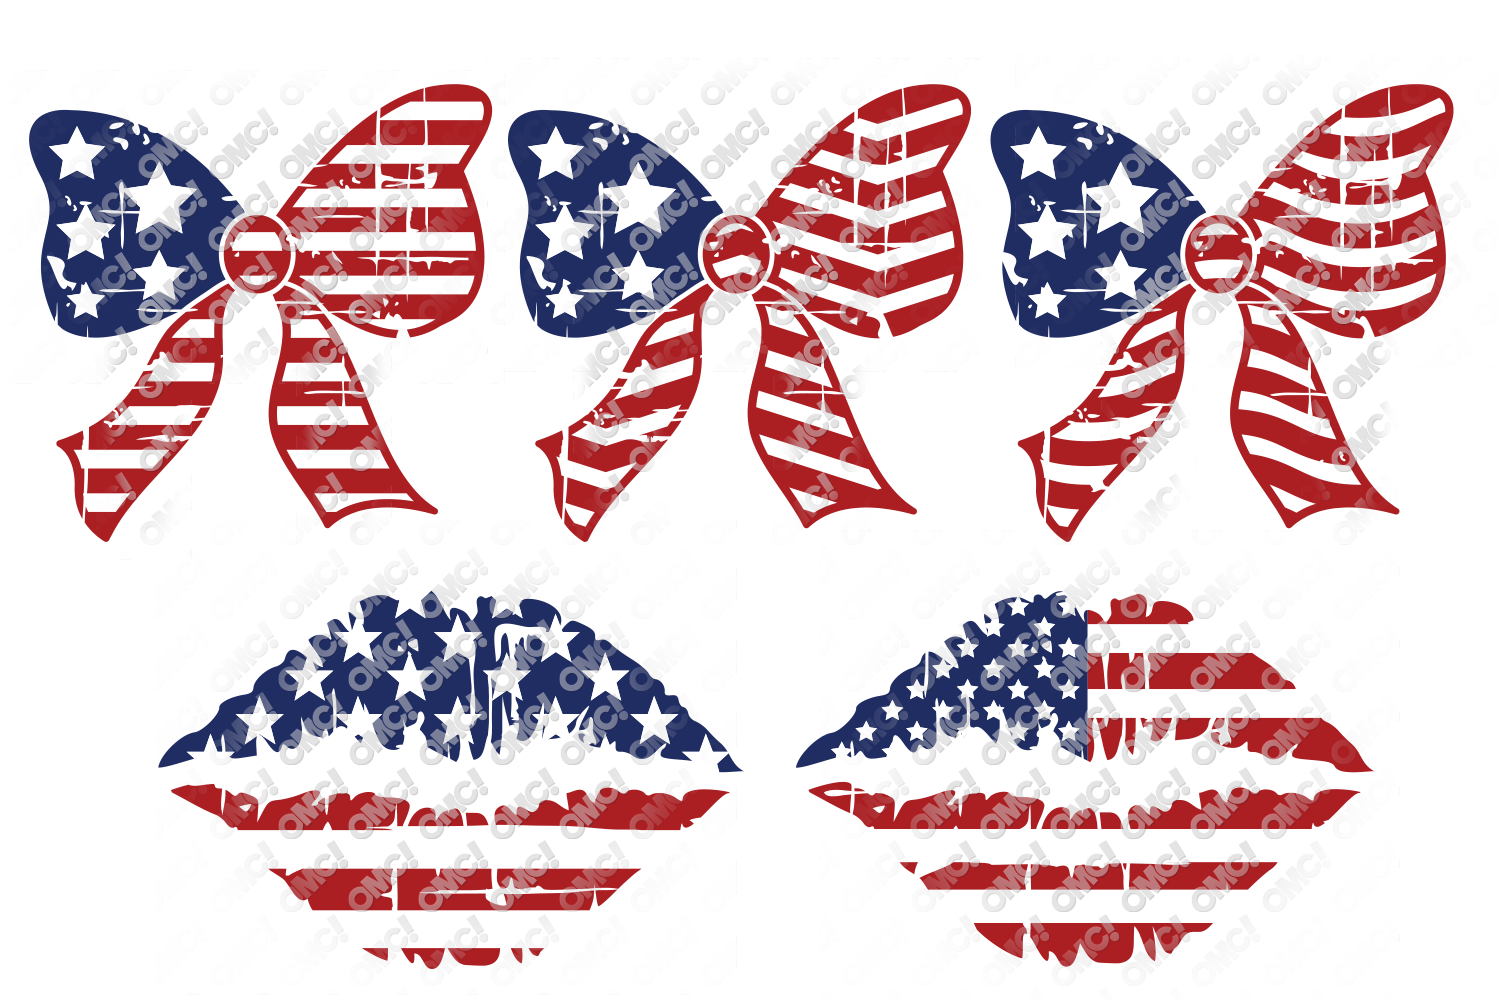 Download Distressed American Flag SVG in SVG, DXF, PNG, EPS, JPEG